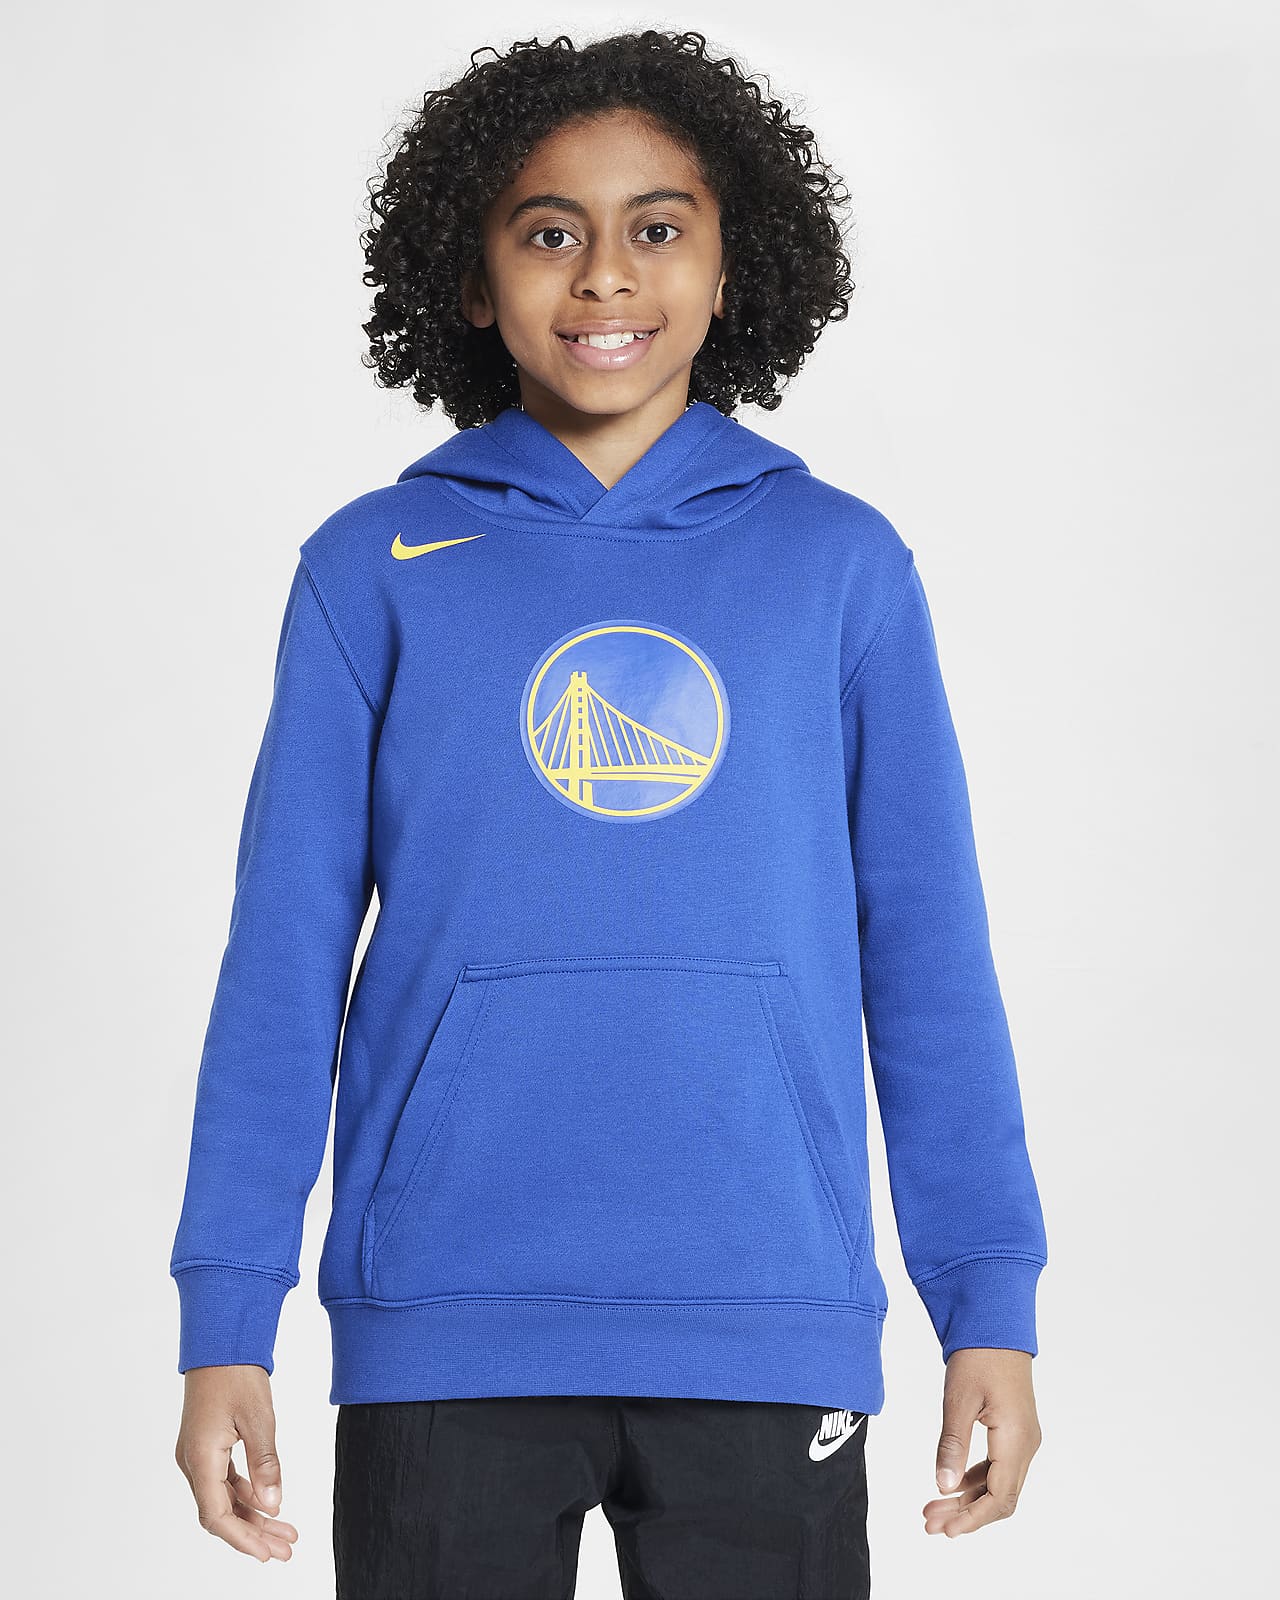 Golden State Warriors Club Sudadera con capucha de tejido Fleece Nike de la NBA - Niño/a